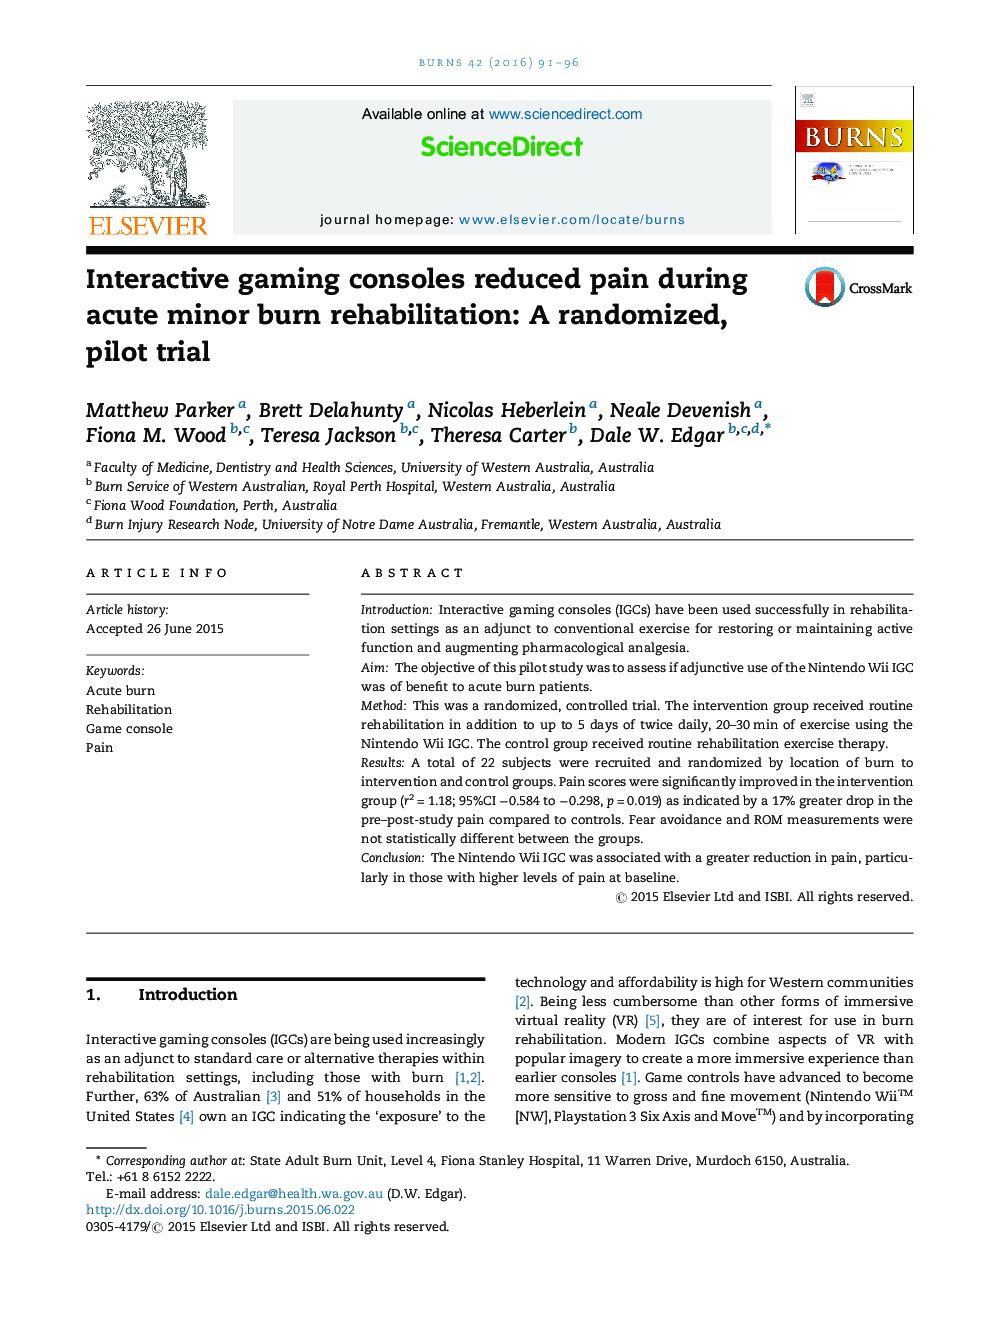 Interactive gaming consoles reduced pain during acute minor burn rehabilitation: A randomized, pilot trial